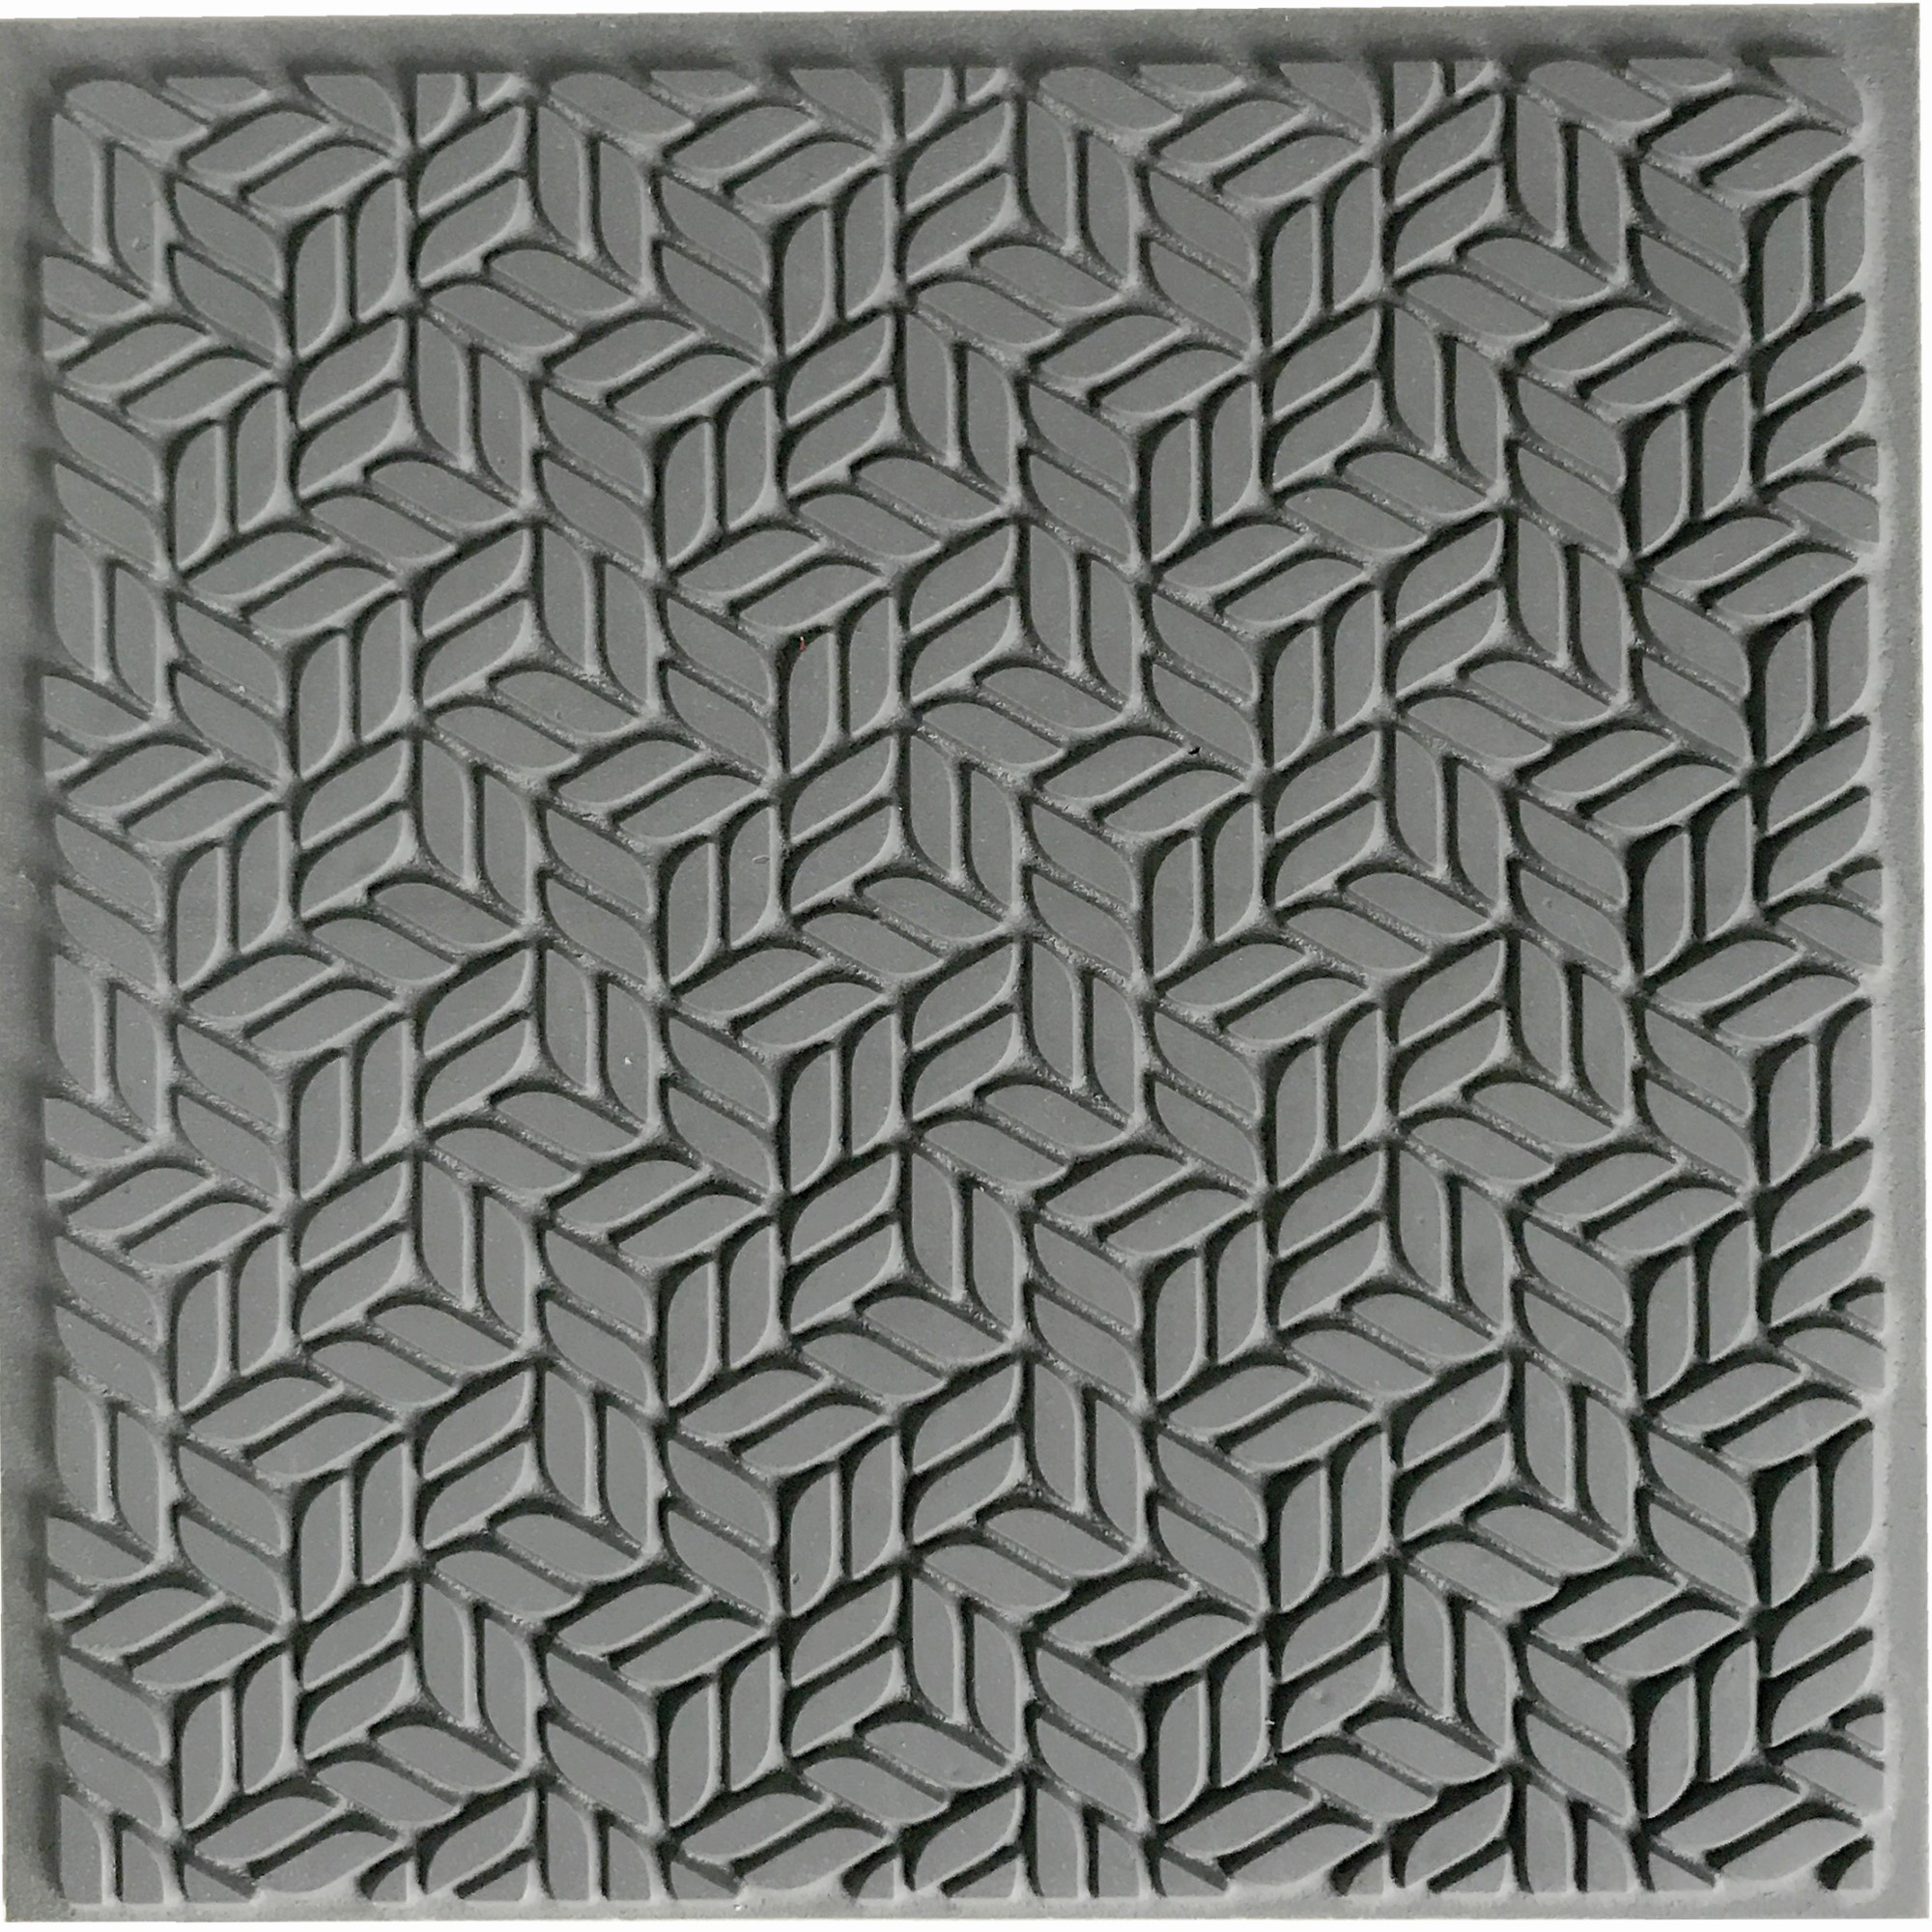 Cernit accessory - gray plate texture